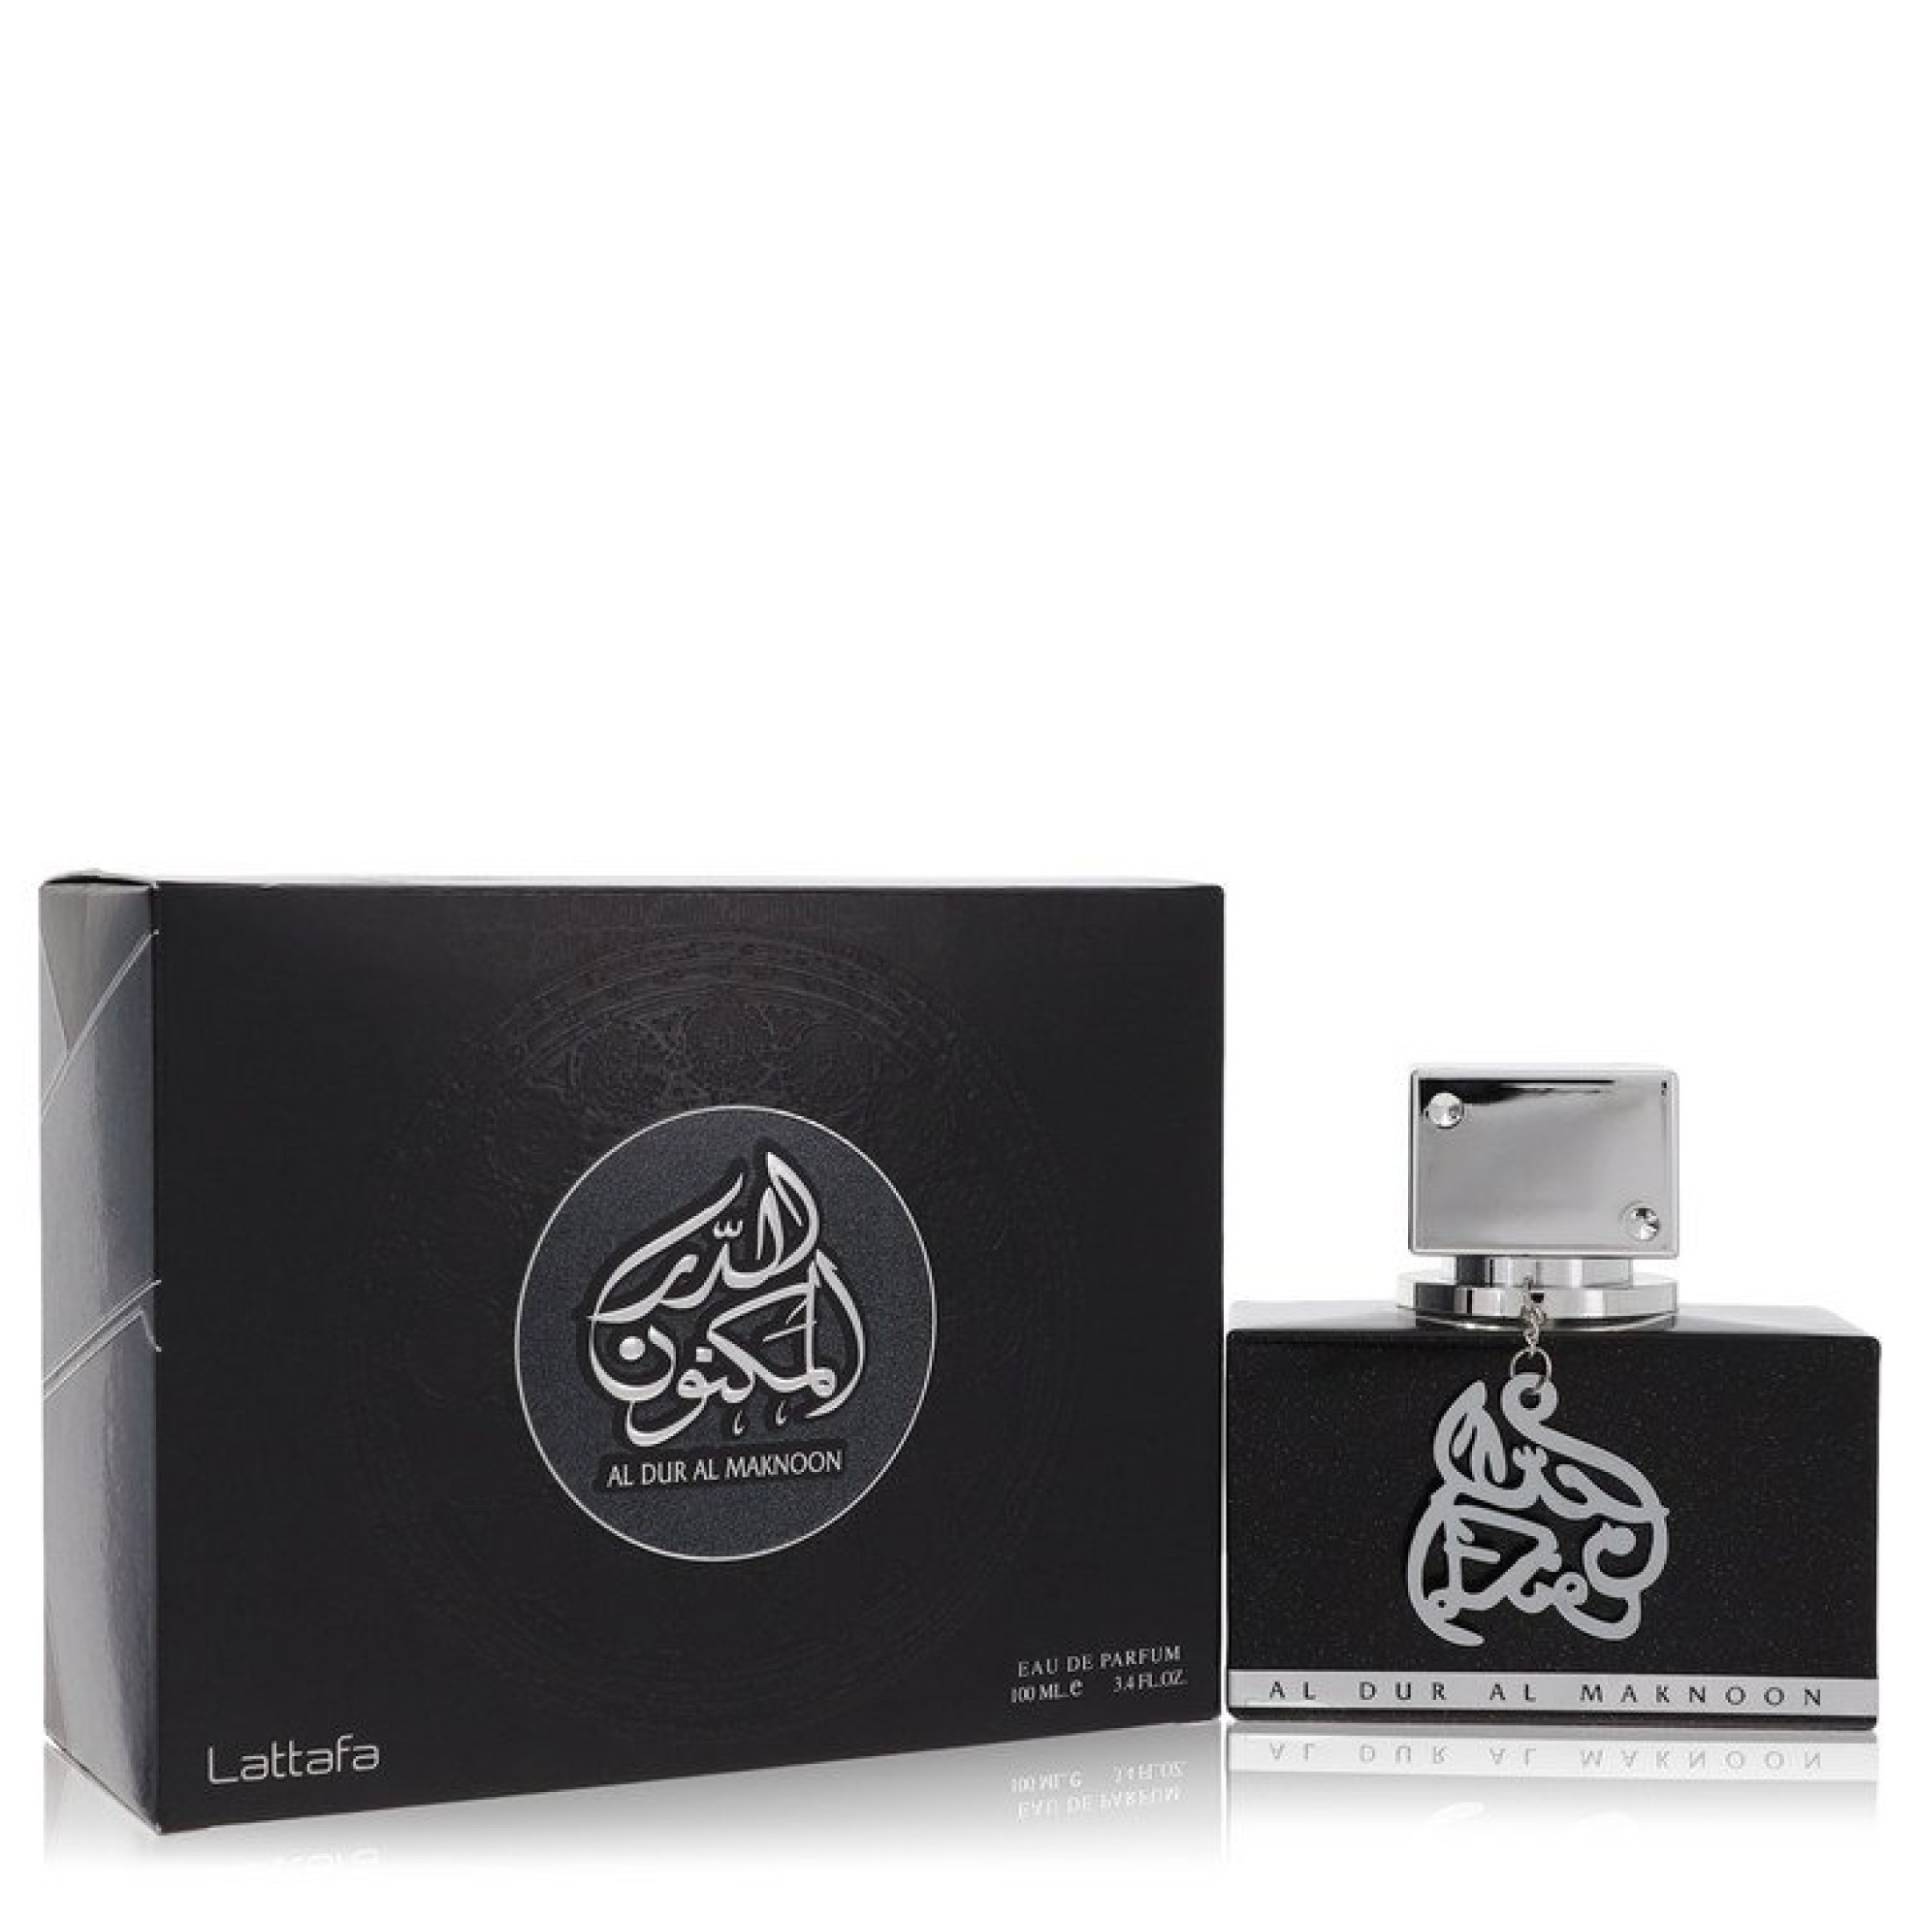 Lattafa Al Dur Al Maknoon Silver Eau De Parfum Spray (Unisex) 101 ml von Lattafa